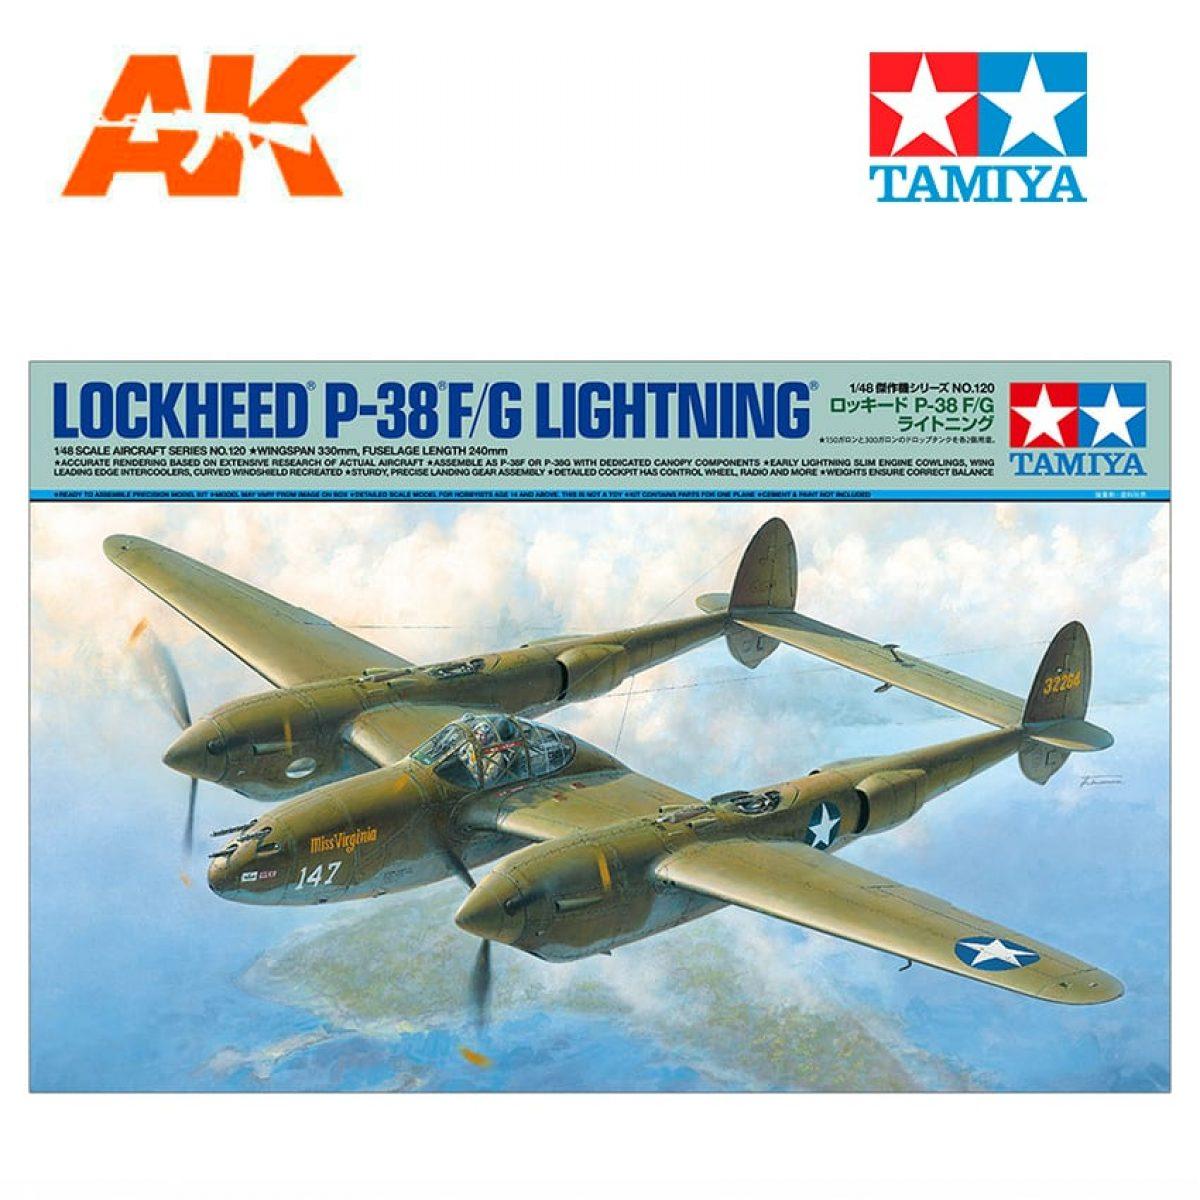 P 38 Lightning Rc Plane: Building and Assembling Tips for P-38 Lightning RC Plane